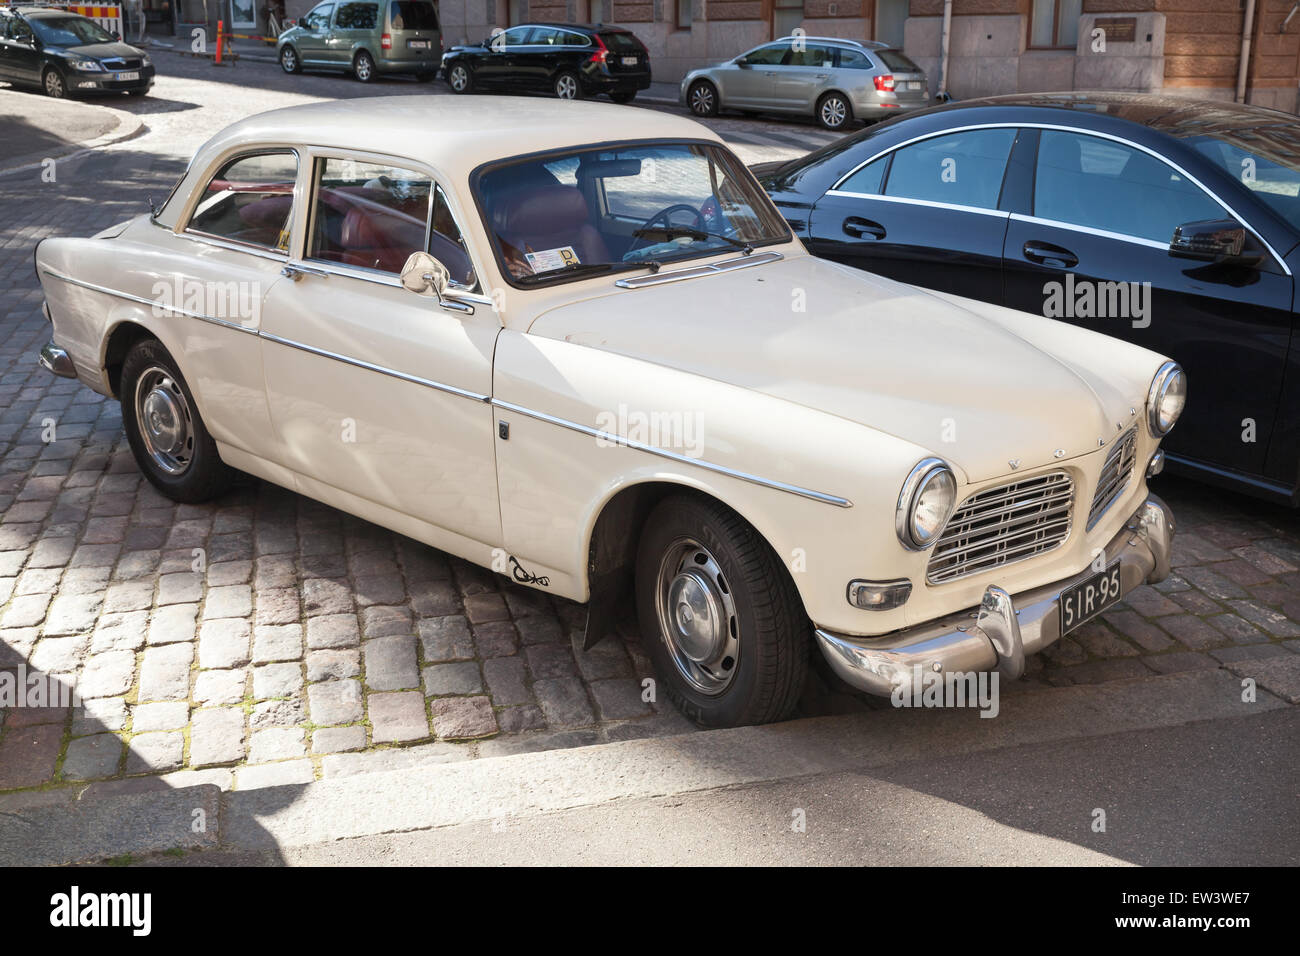 Helsinki, Finland - June 13, 2015: Old white Volvo Amazon 121 B12 car is parked on the roadside in Helsinki Stock Photo